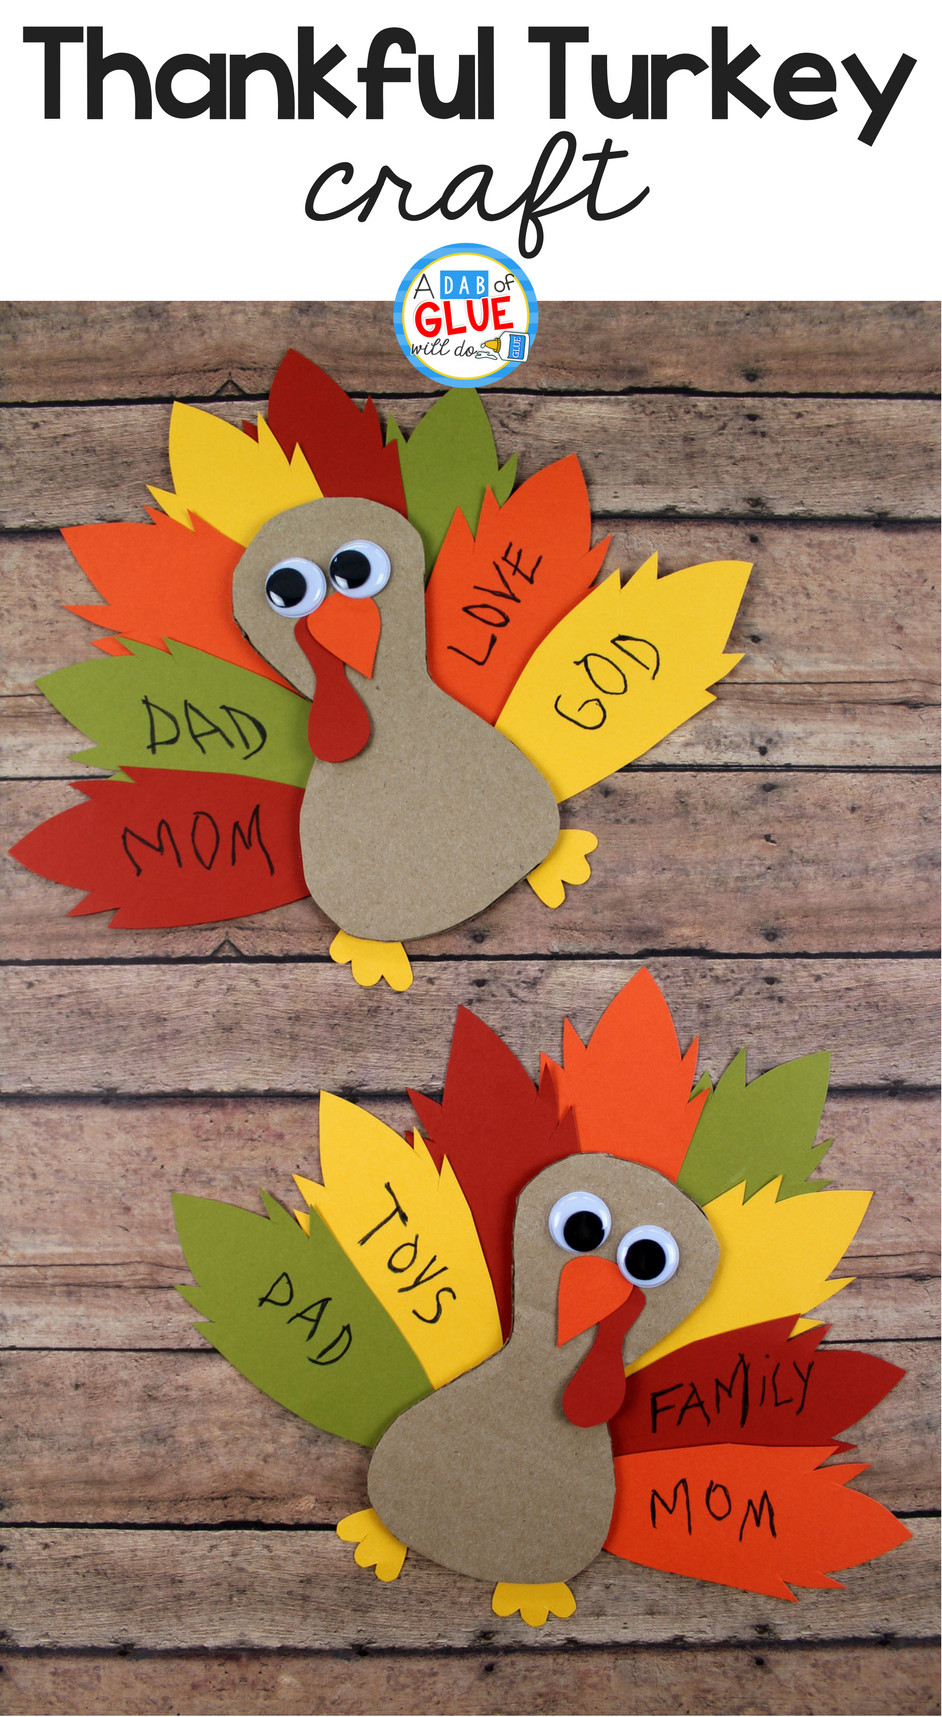 Thanksgiving Preschool Crafts
 Cardboard Thankful Turkey Craft